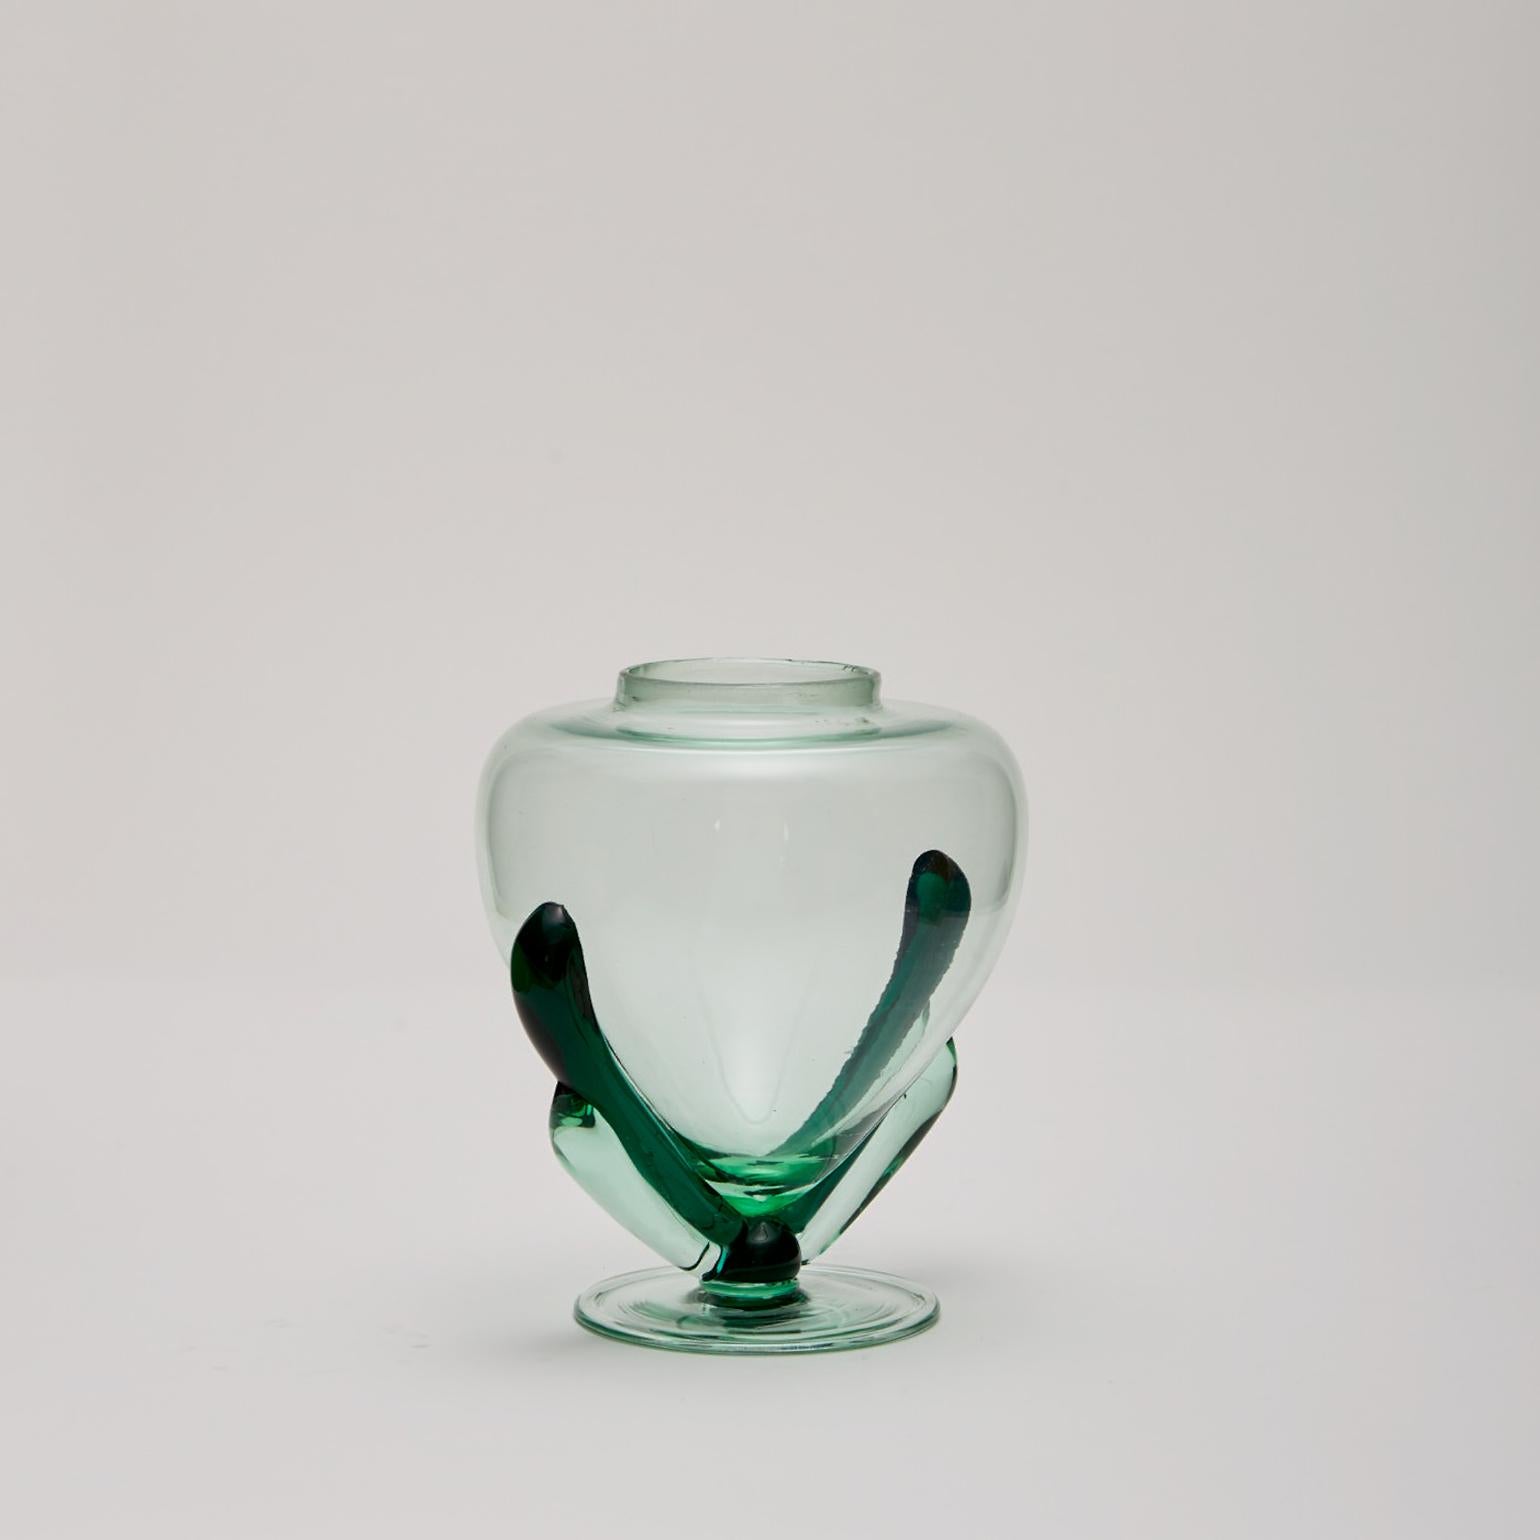 Art Deco Perfume Bottleor Vase by Carlo Scarpa for MVM Cappellin 1920's For Sale